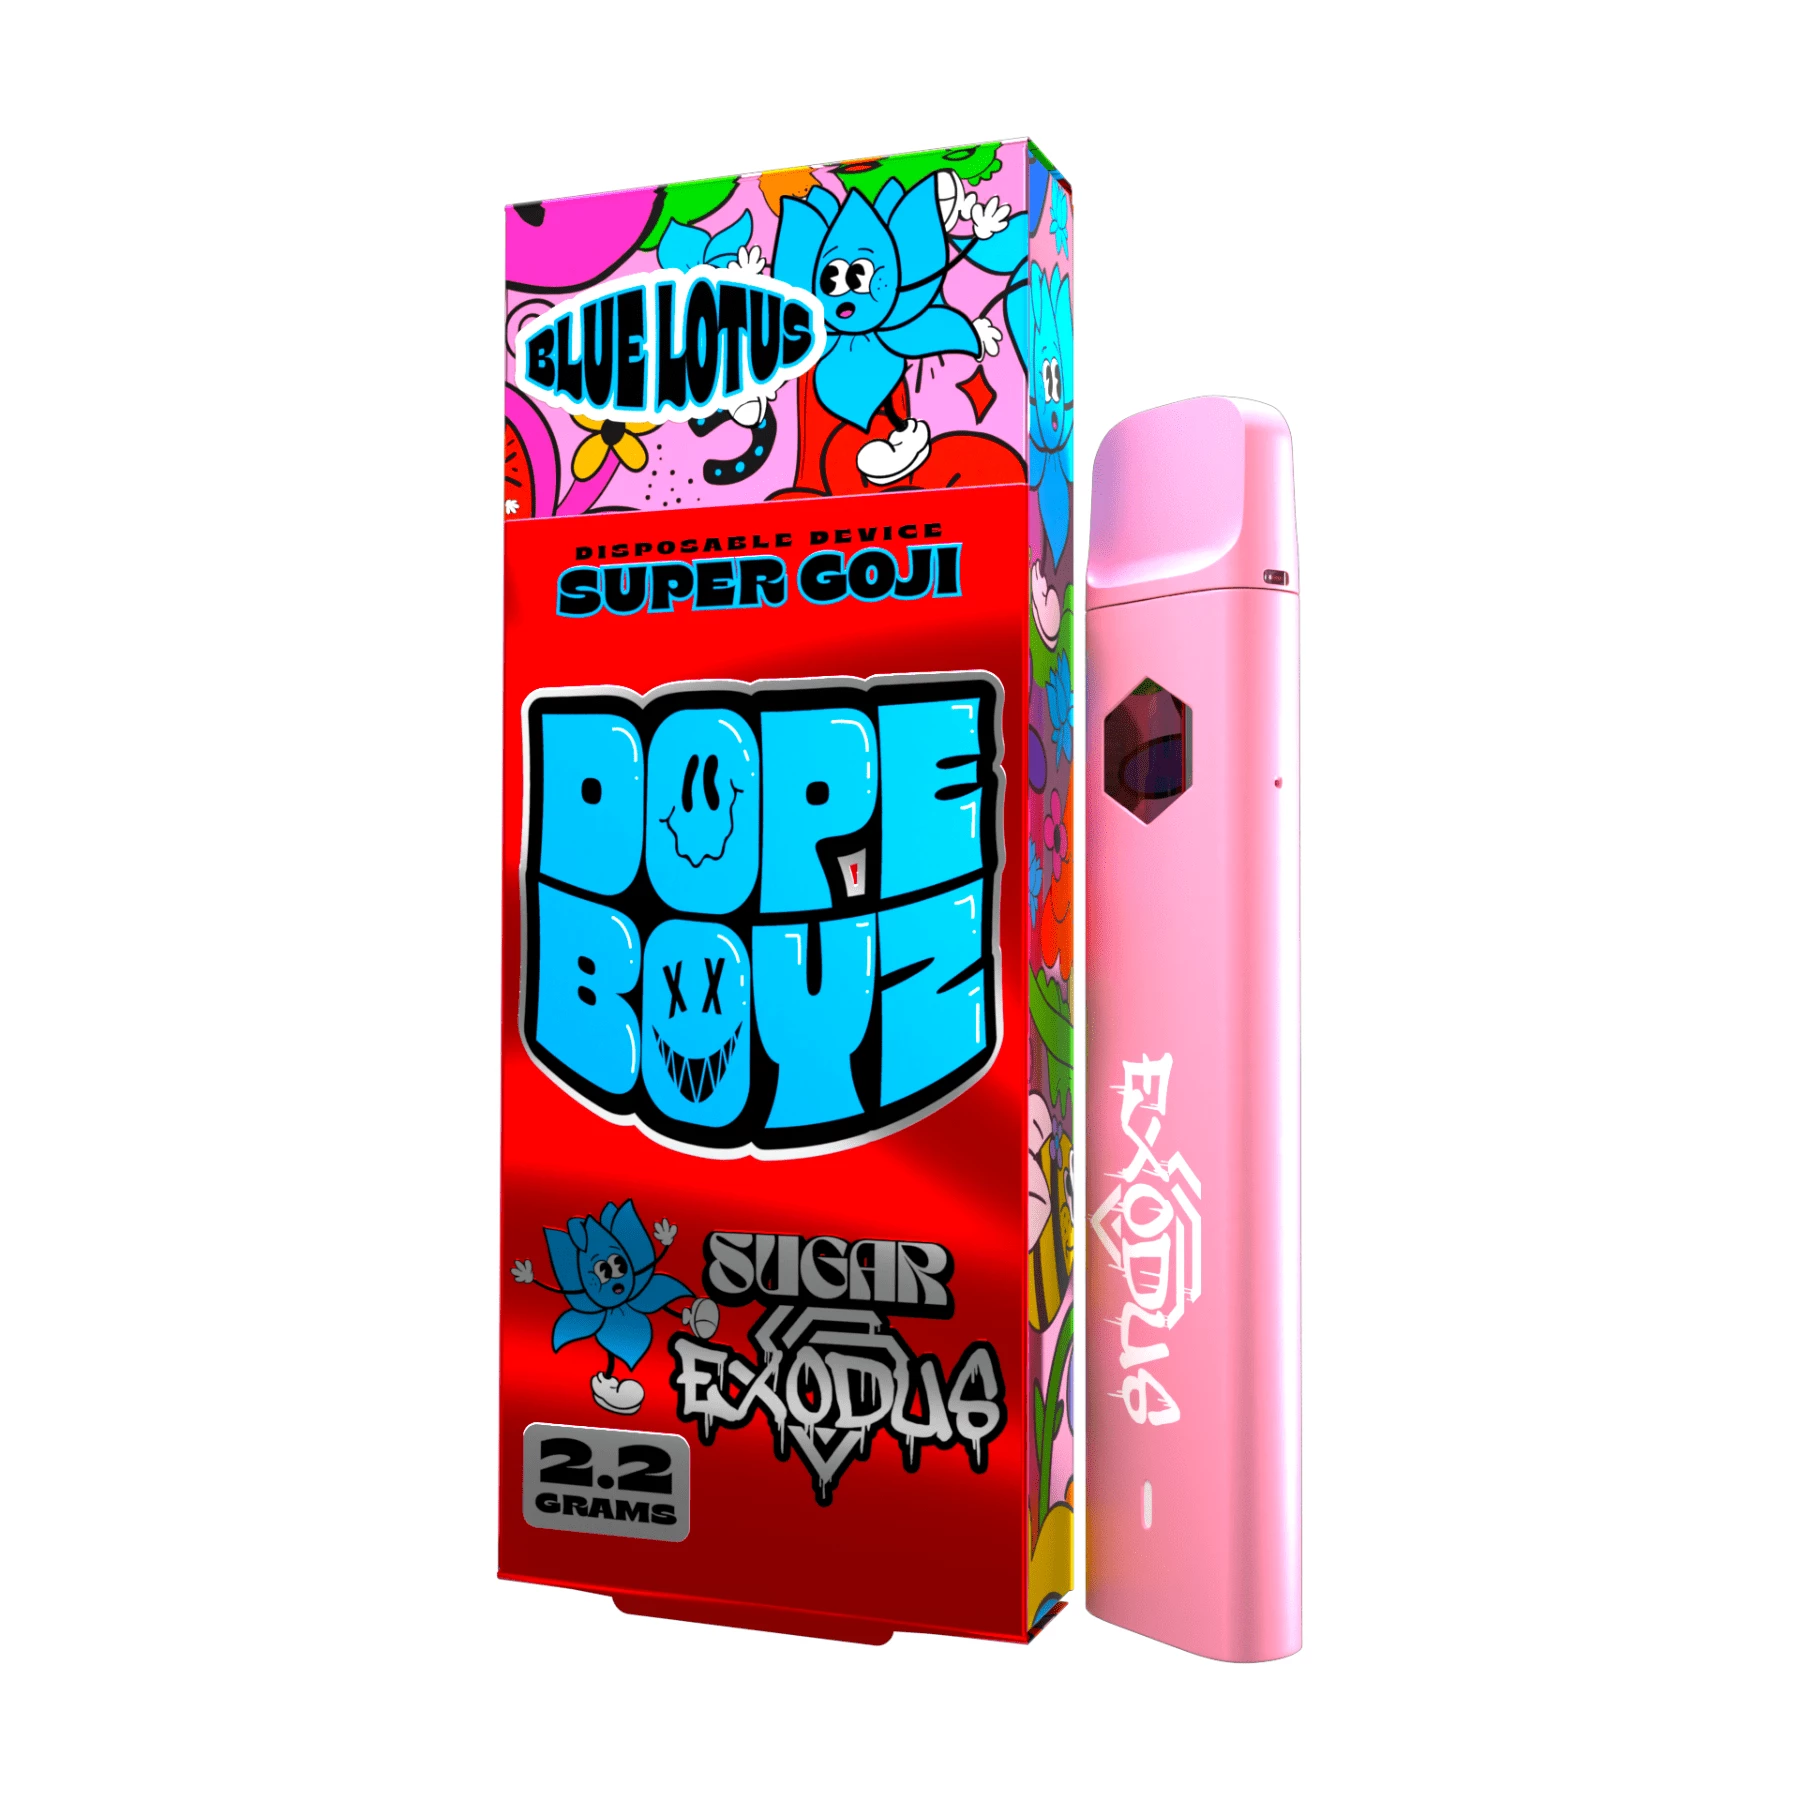 A pink box with a pink sugar exodus dope boyz blue lotus disposables (2. 2g) e-liquid.